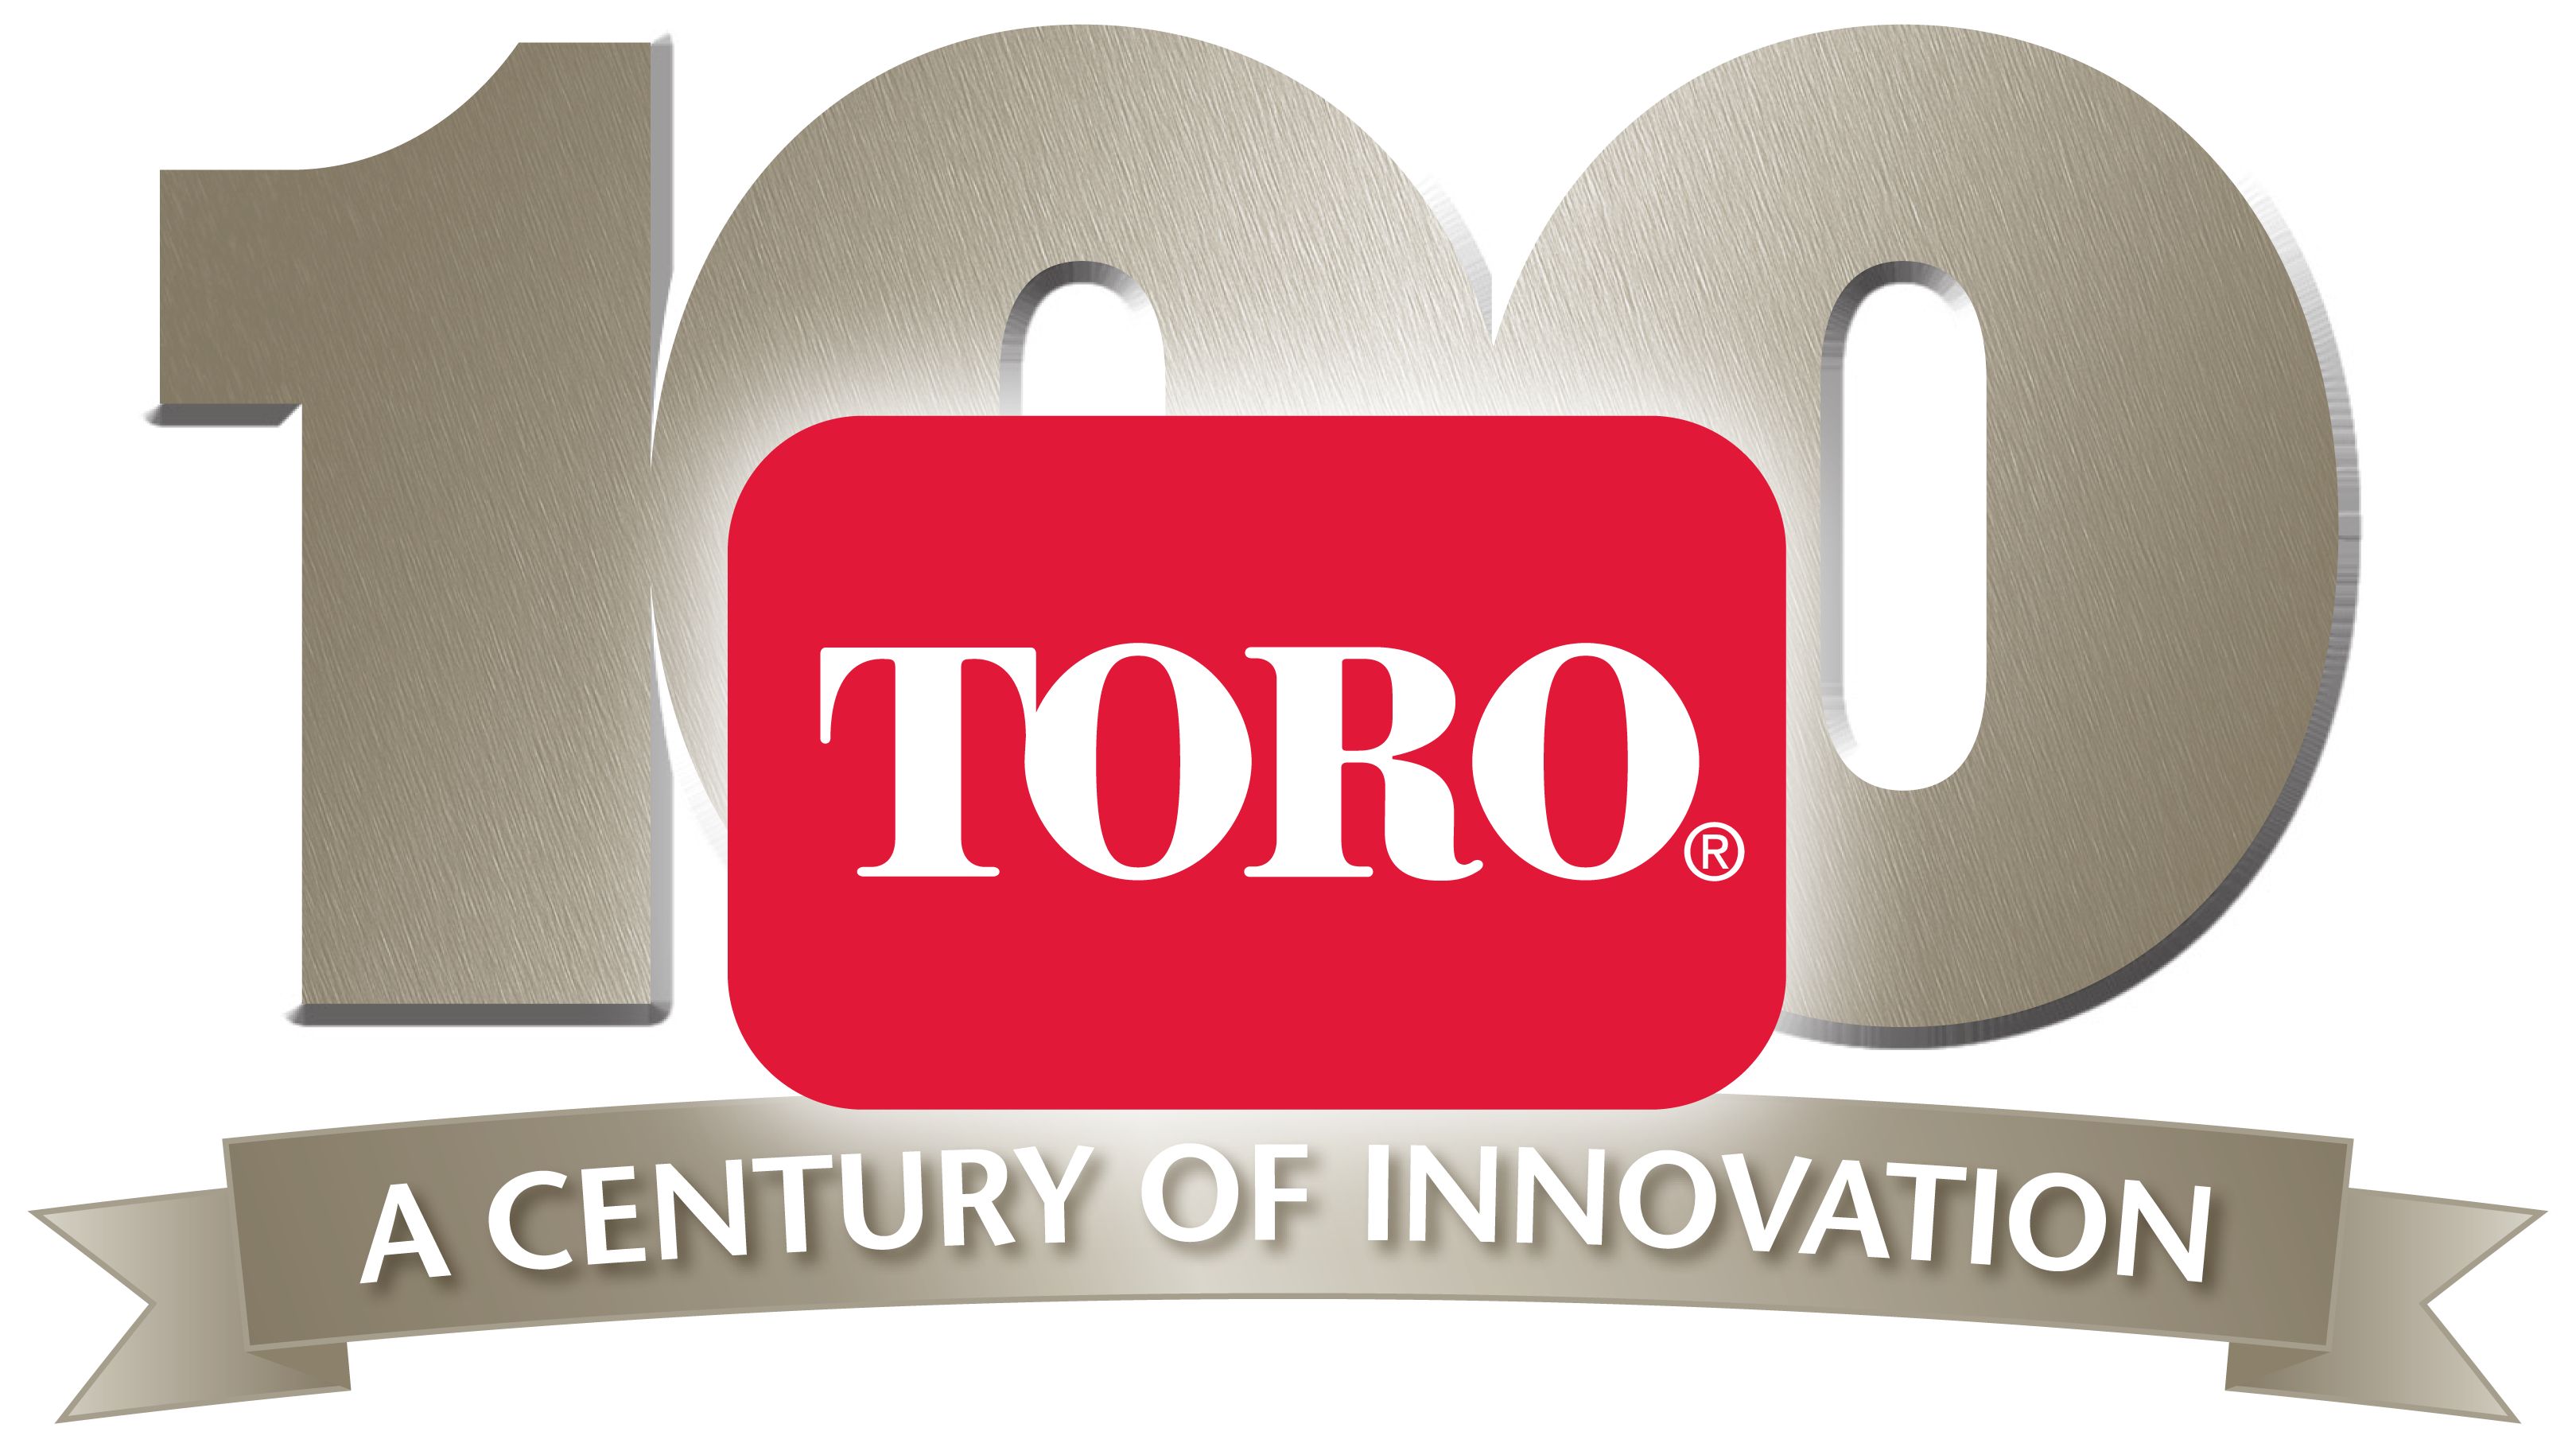 Foto Компания Торо начинает празднование Столетия